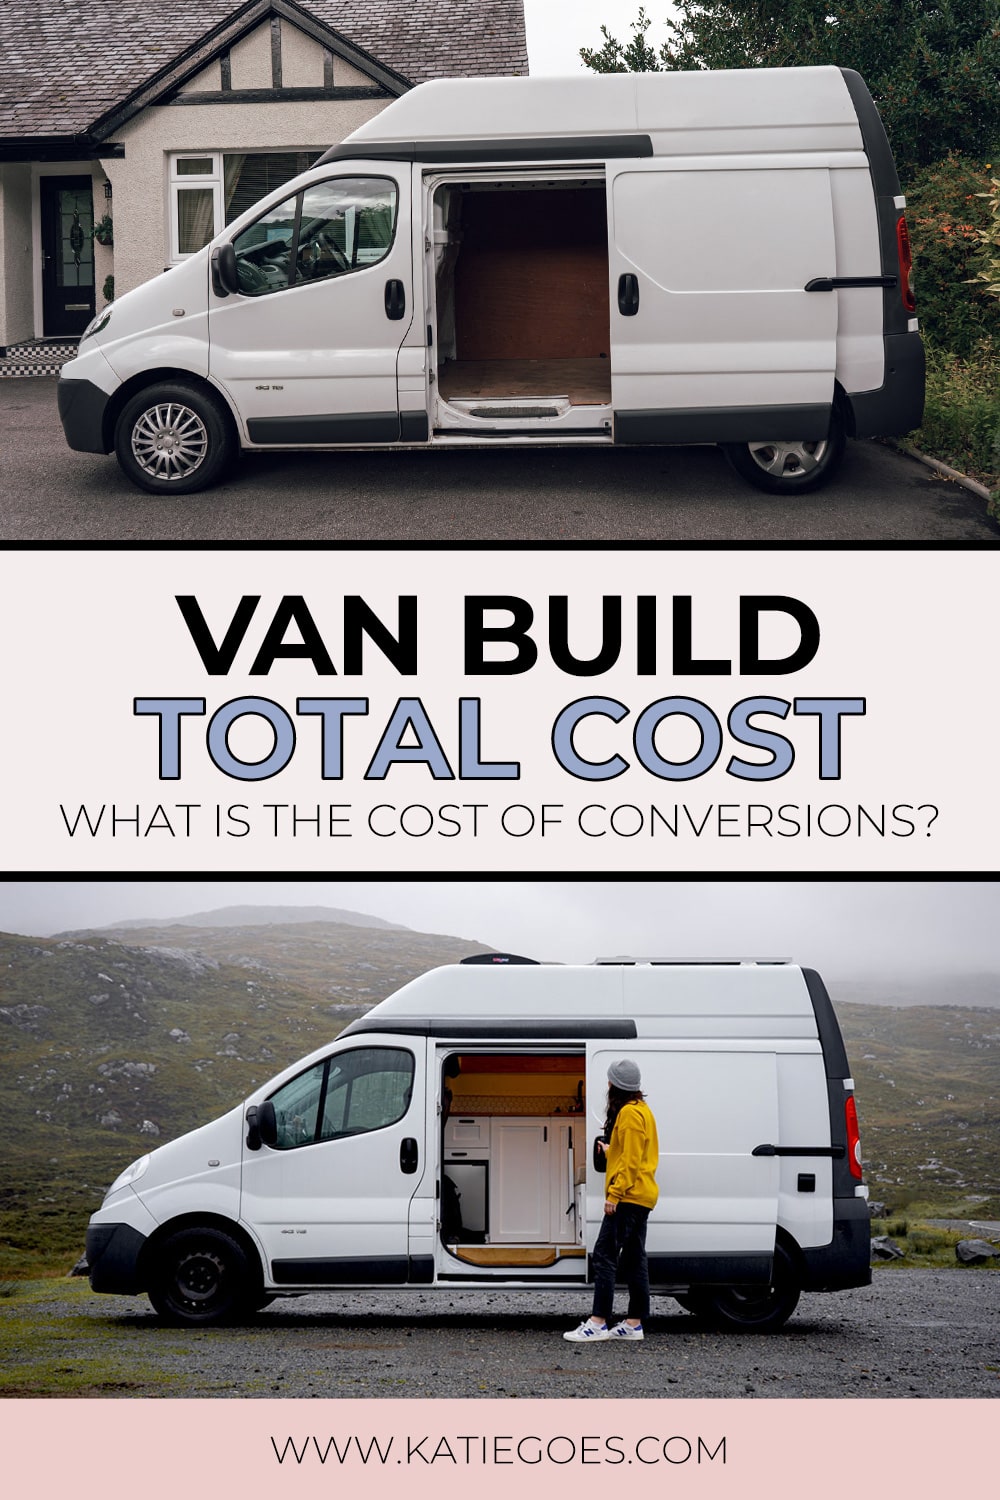 Van Conversion Cost: Van Build Total Cost